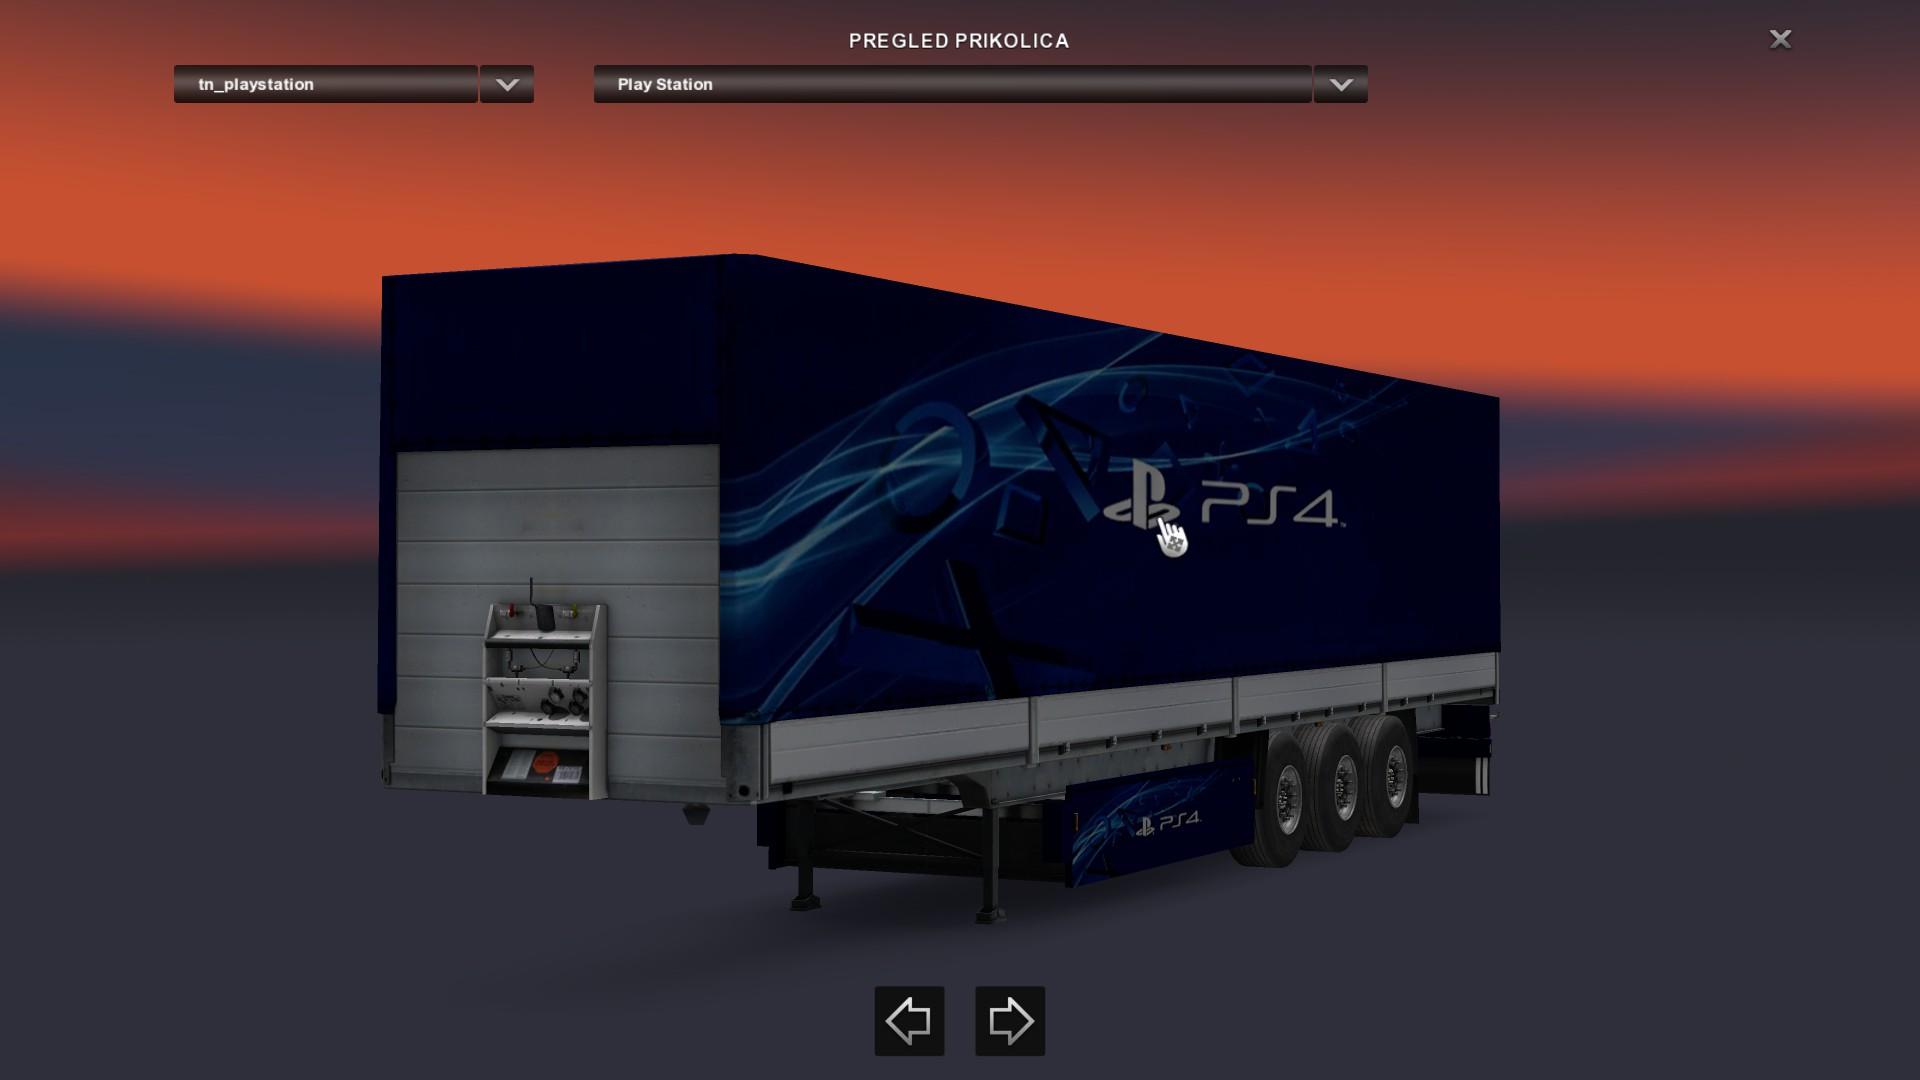 SONY PLAYSTATION PS4 TRAILER V1 Mod Euro Truck Simulator 2 Mods